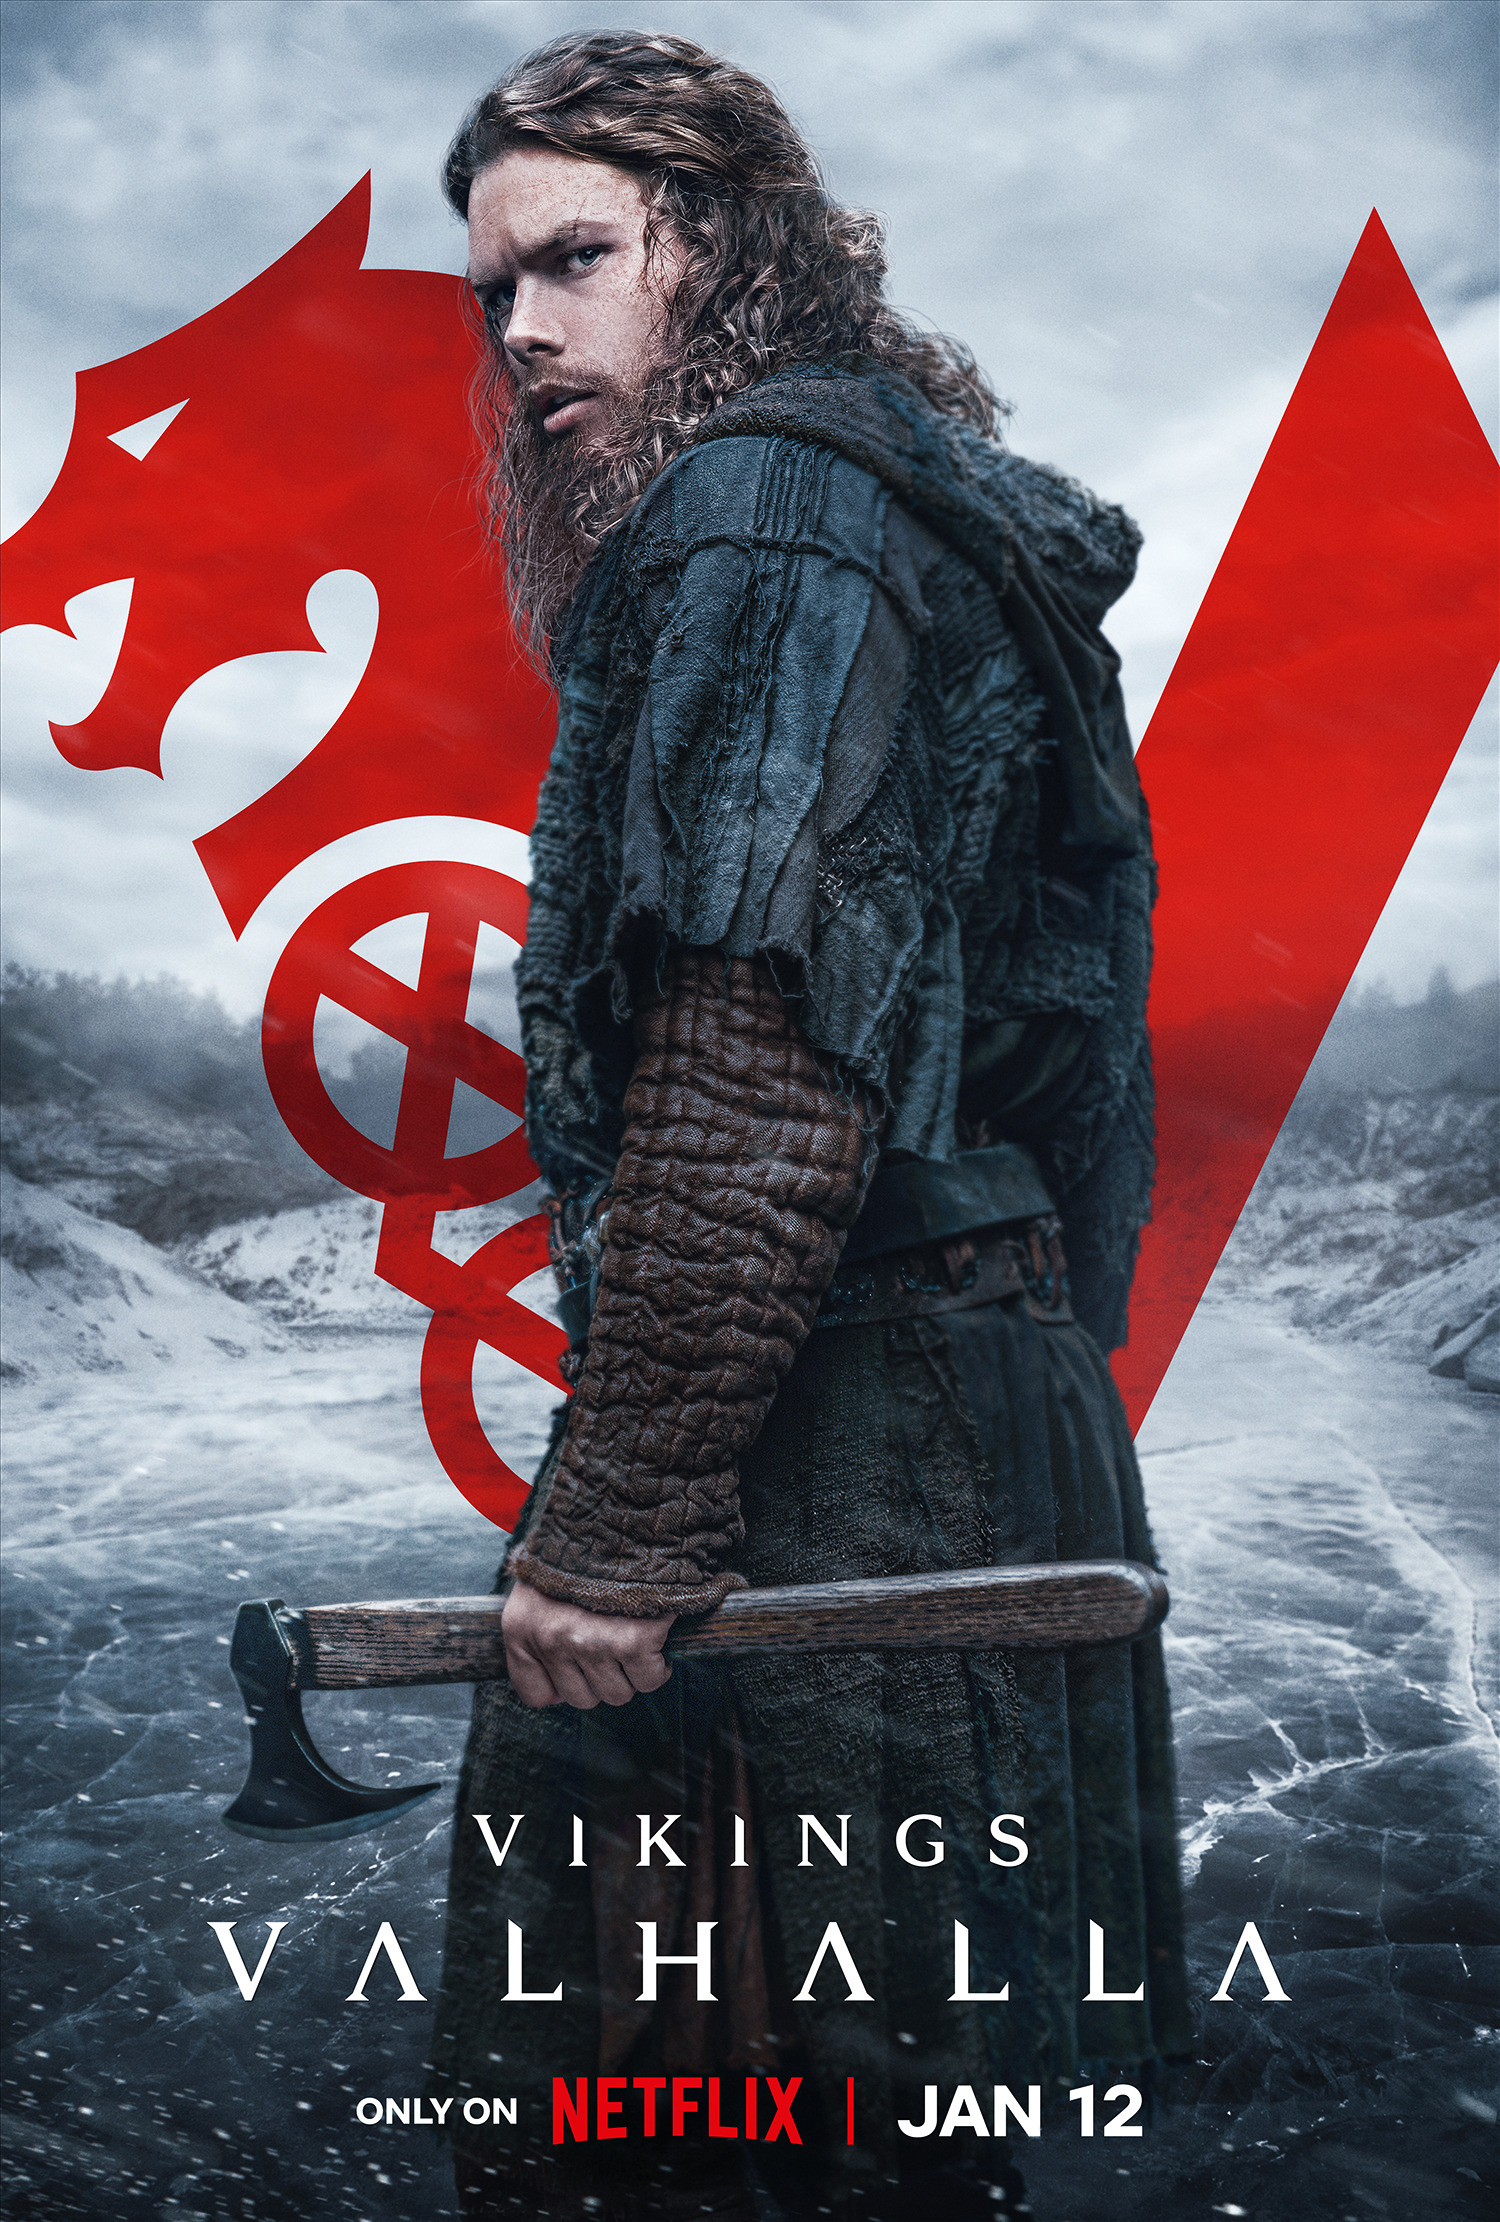 Mega Sized TV Poster Image for Vikings: Valhalla (#13 of 18)